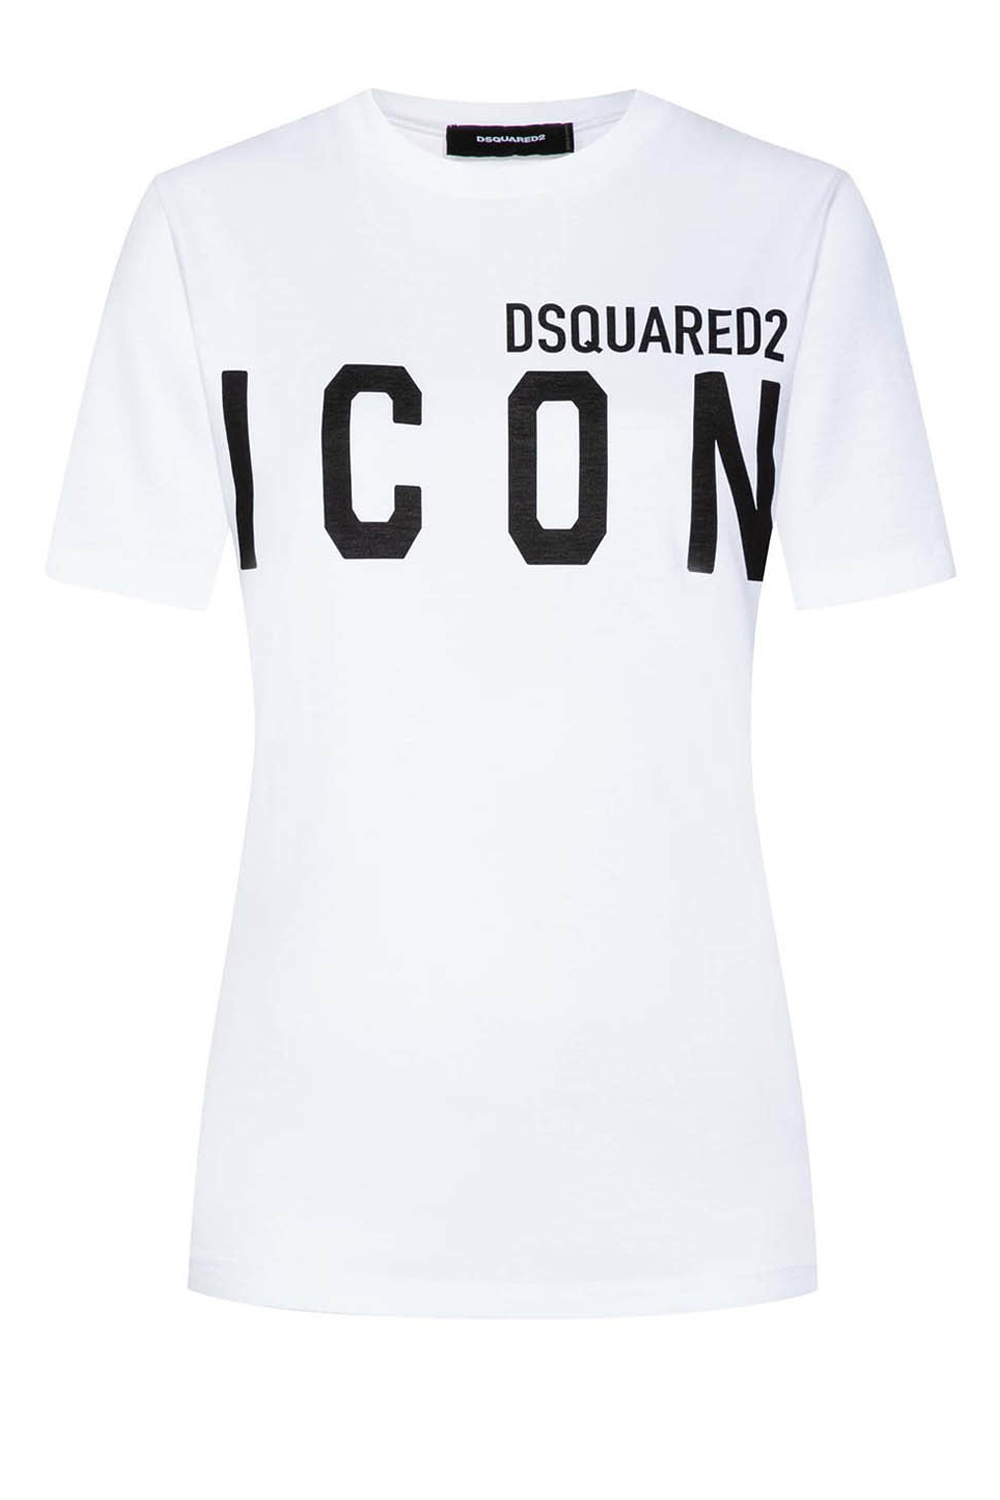 accu Lam enkel Dsquared2 Icon t-shirt Wit - Dresscode